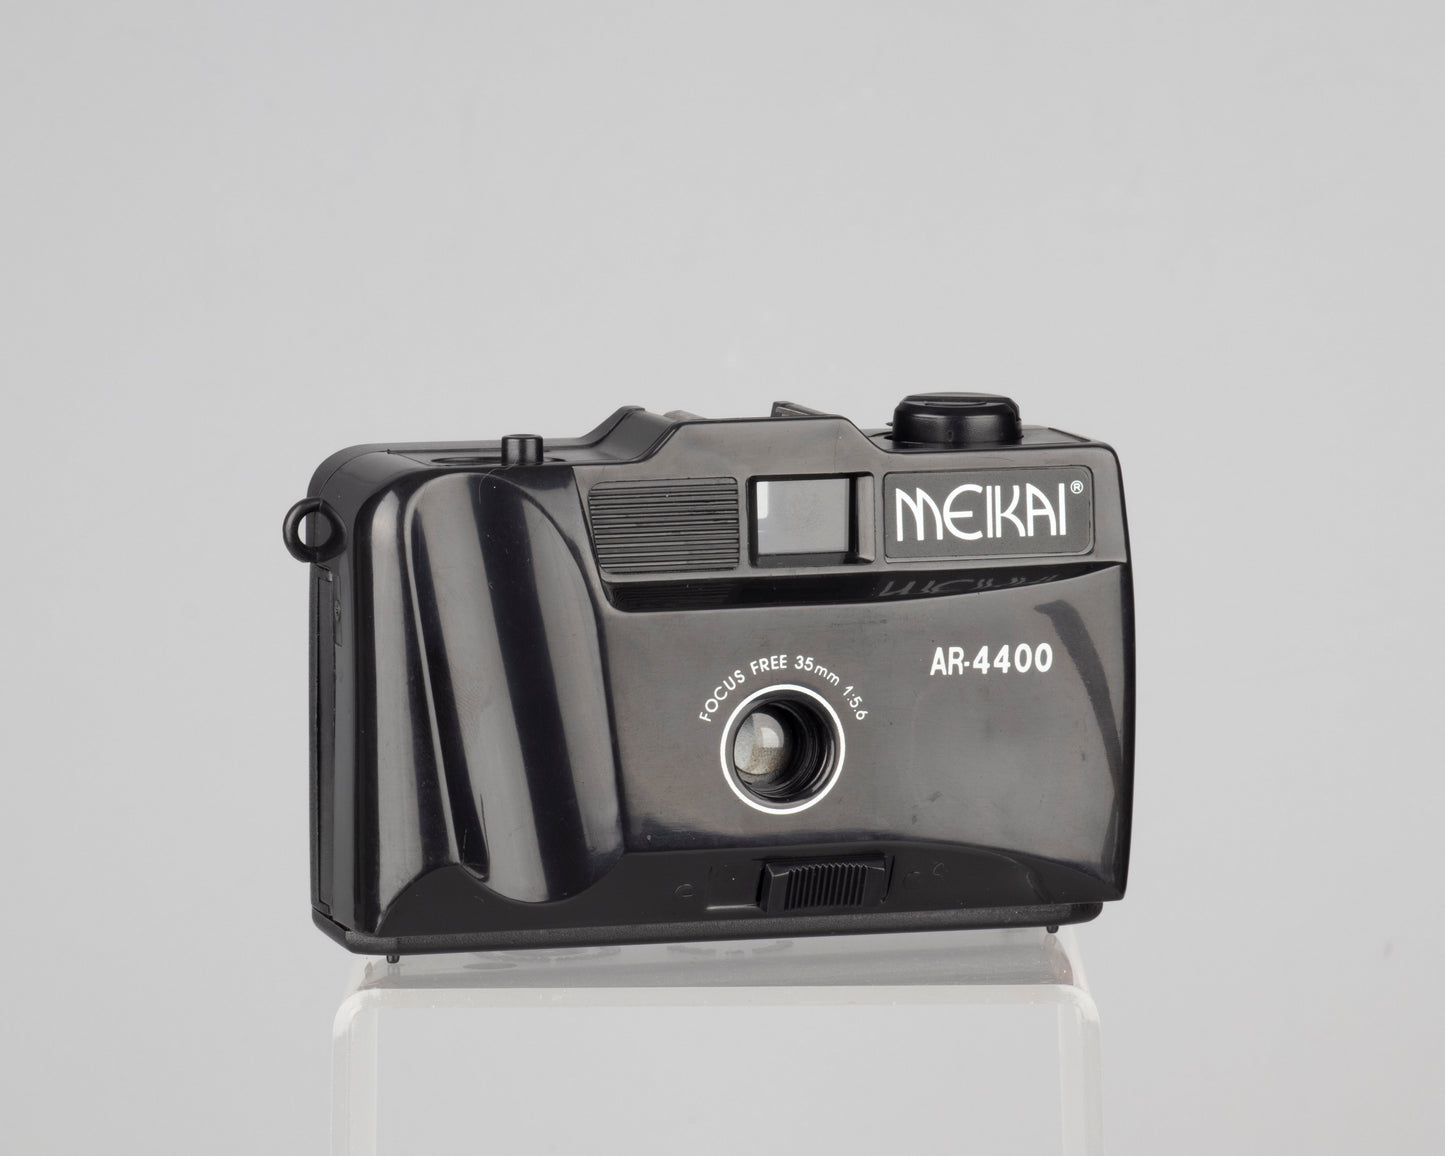 Meikai AR-4400 appareil photo 35 mm sans mise au point